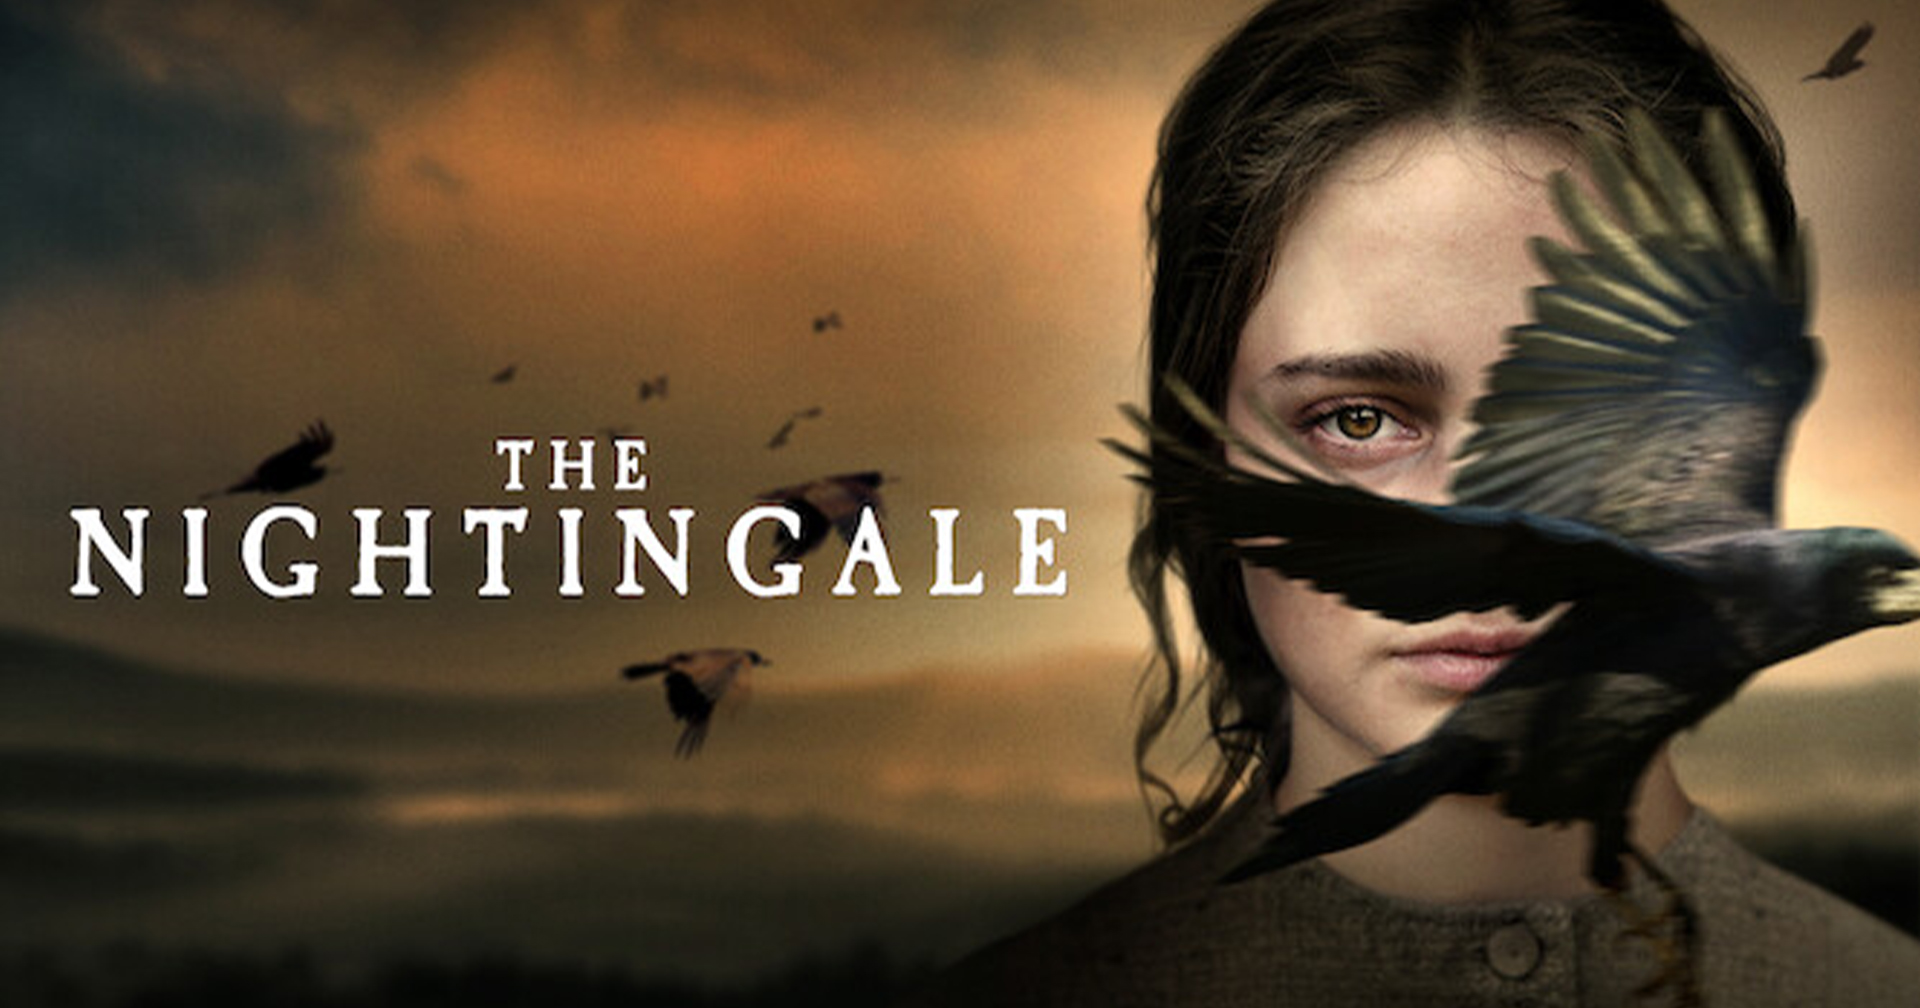 The Nightingale ปักษาพยาบาท